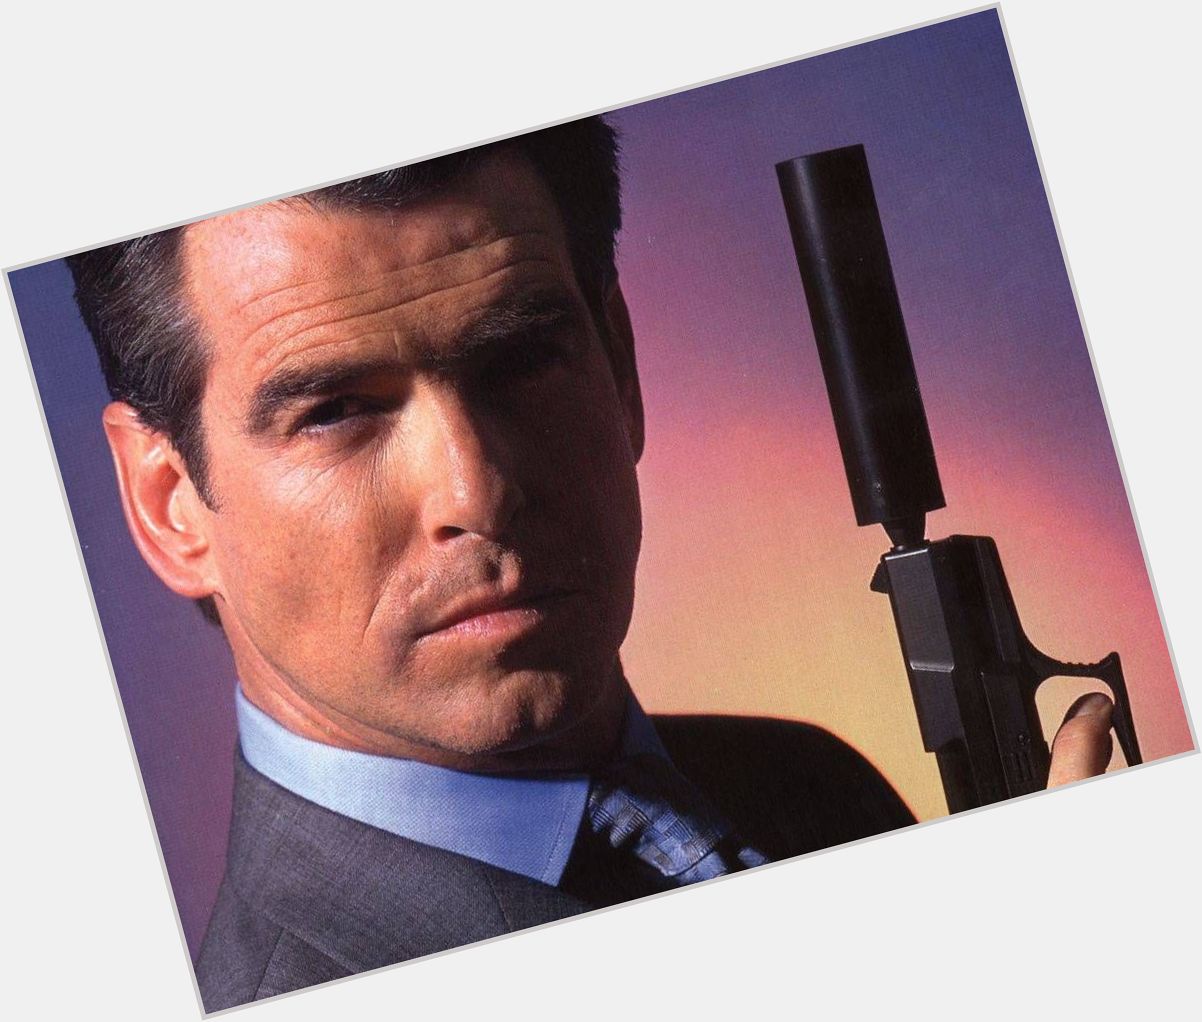 Happy birthday to the best Bond (controversial) - Pierce Brosnan! 